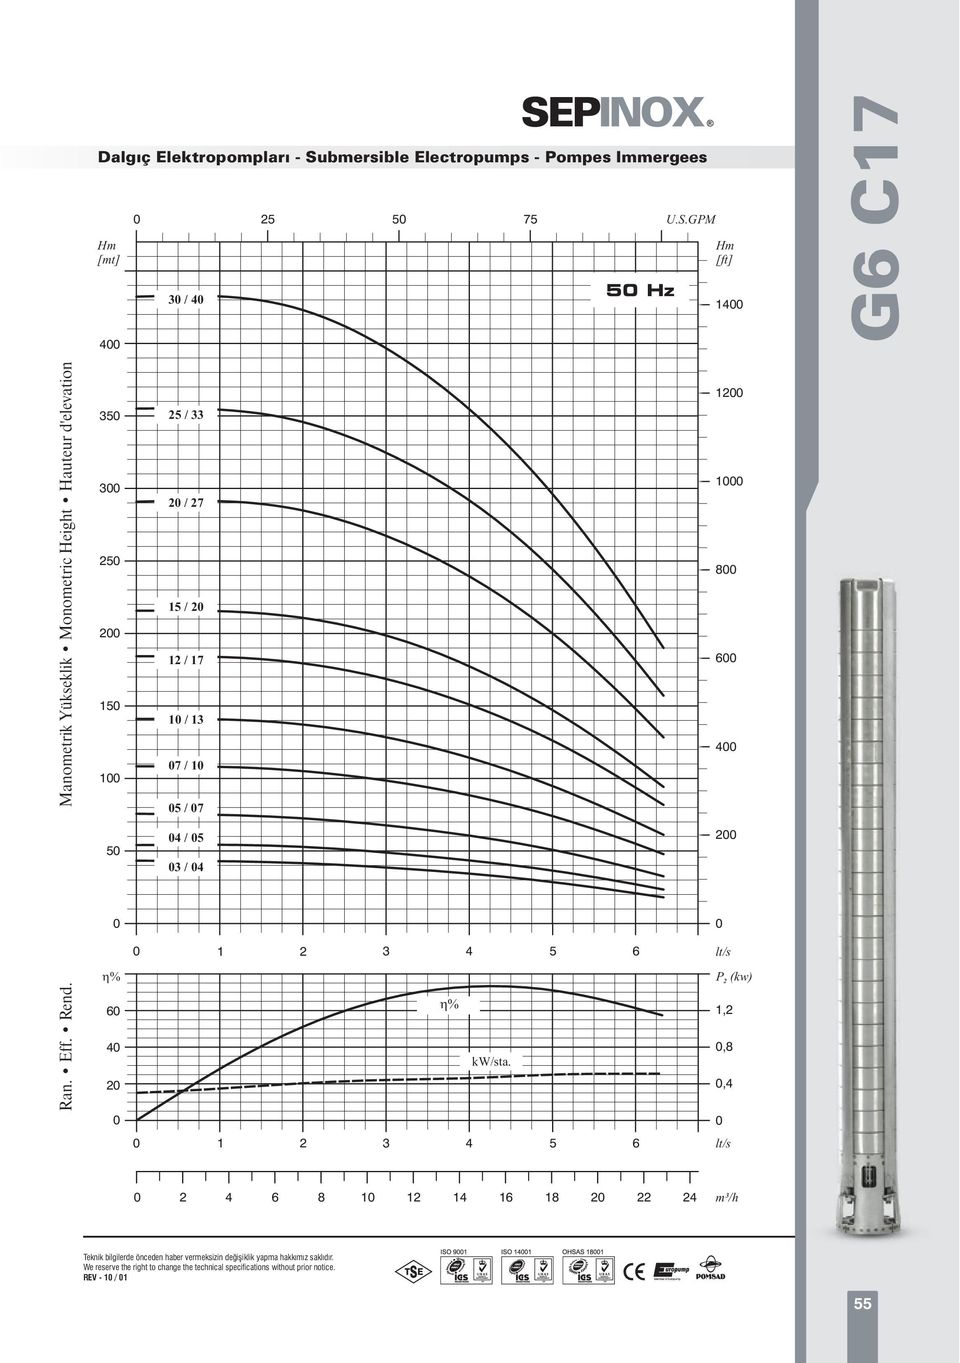 Manometrik Yükseklik Monometric Height Hauteur d'elevation 2 1 2 / 2 / / 2 / 1 / 1 7 / 1 / 7 / / 1 2 kw/sta.